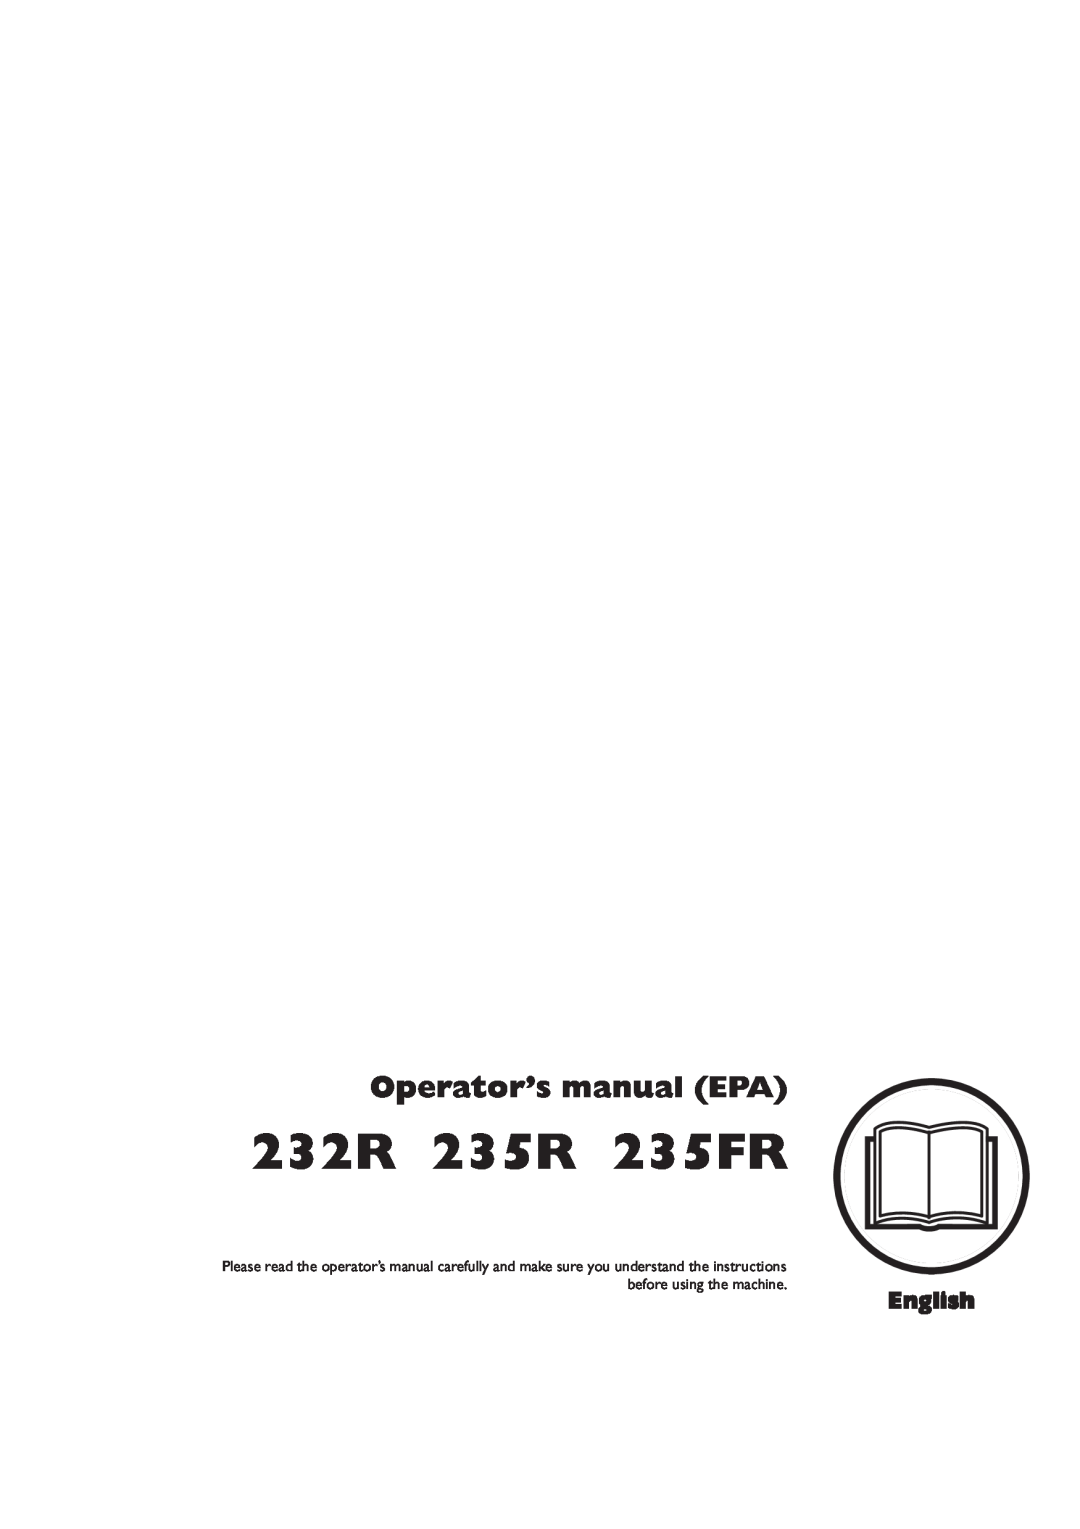 Husqvarna 1151187-95 manual 232R 235R 235FR, Operator’s manual EPA, English 